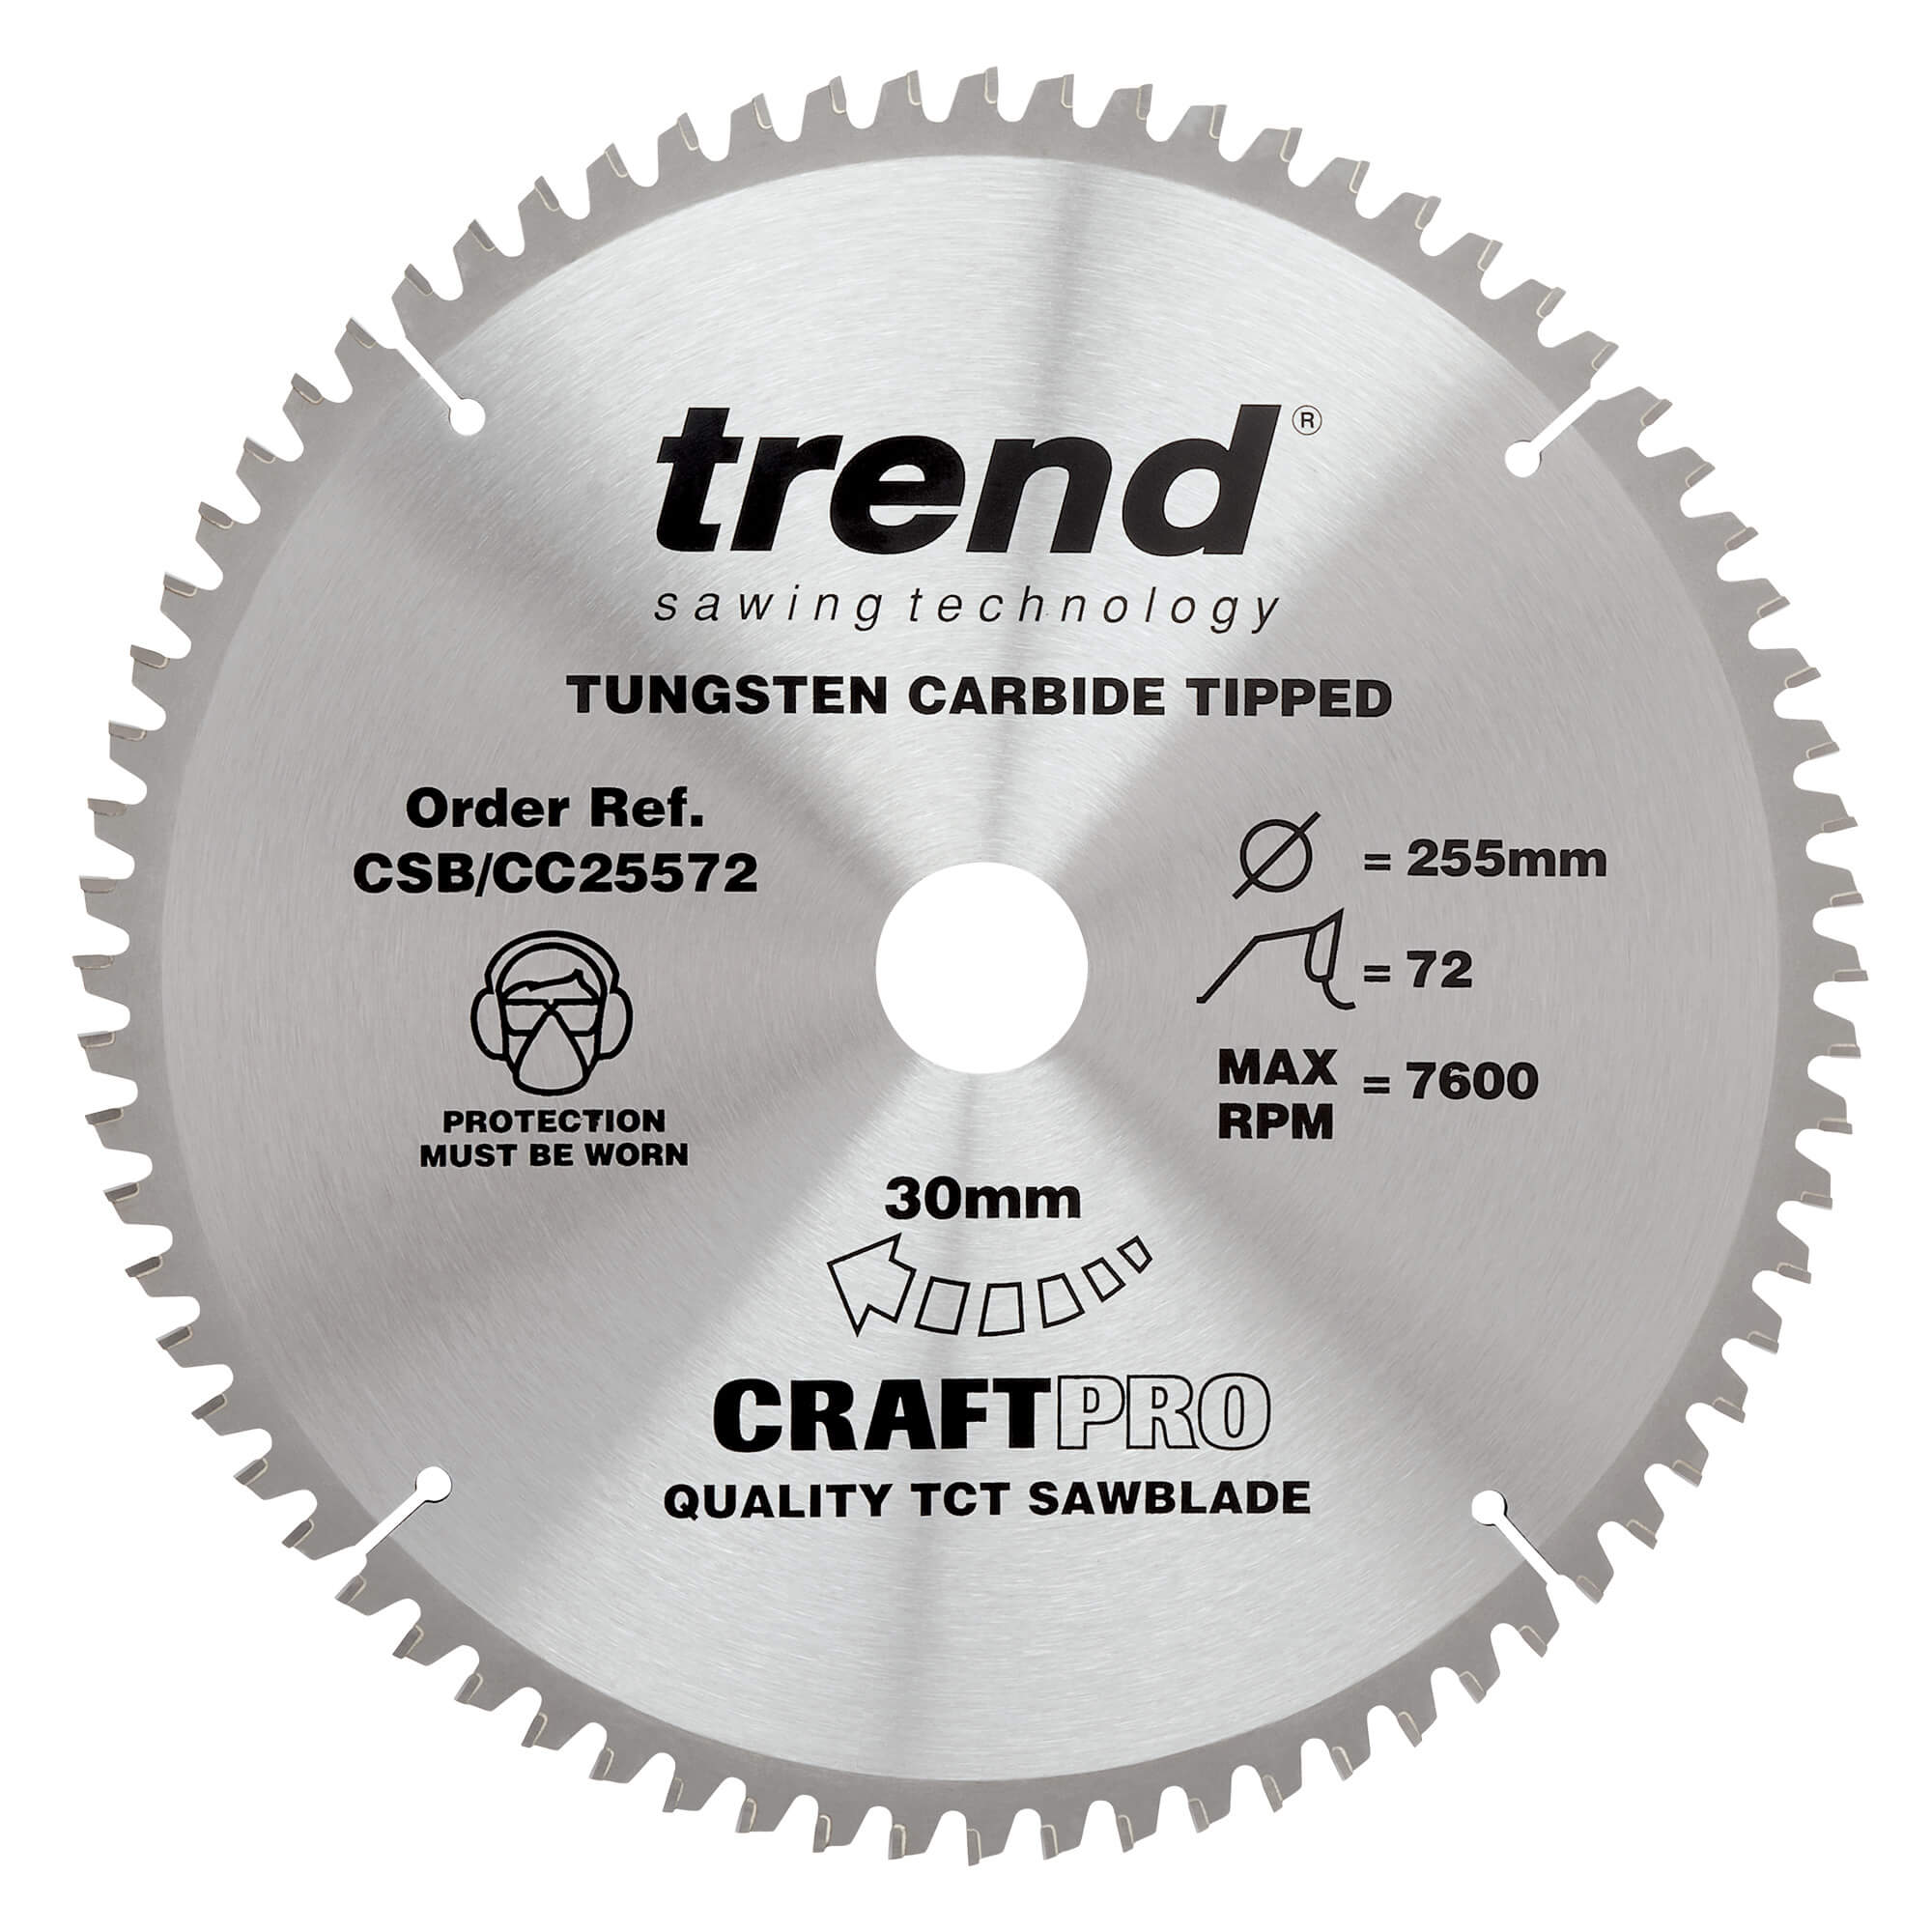 Trend CRAFTPRO Wood Cutting Mitre Saw Blade 255mm 72T 30mm